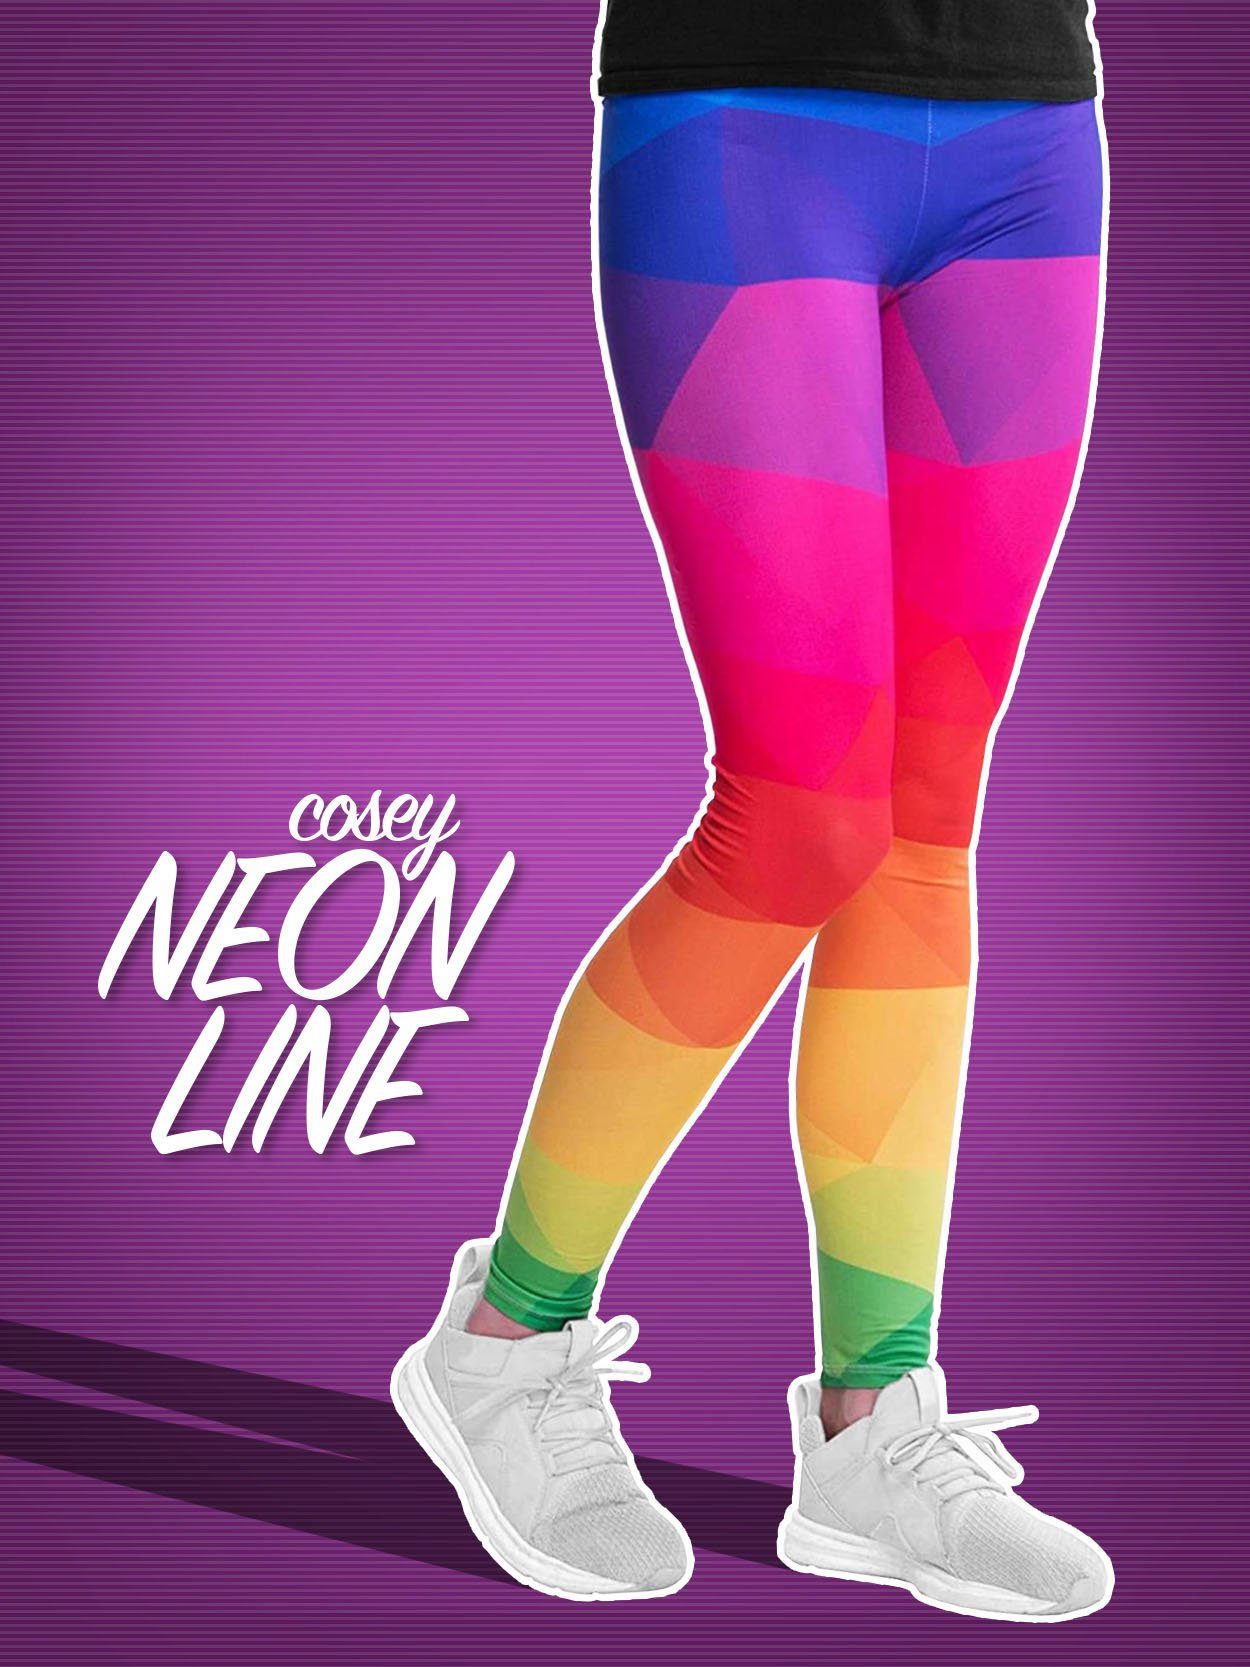 L) Neo Neon - XS Leggings (Einheitsgröße cosey Cubic Line Leggings